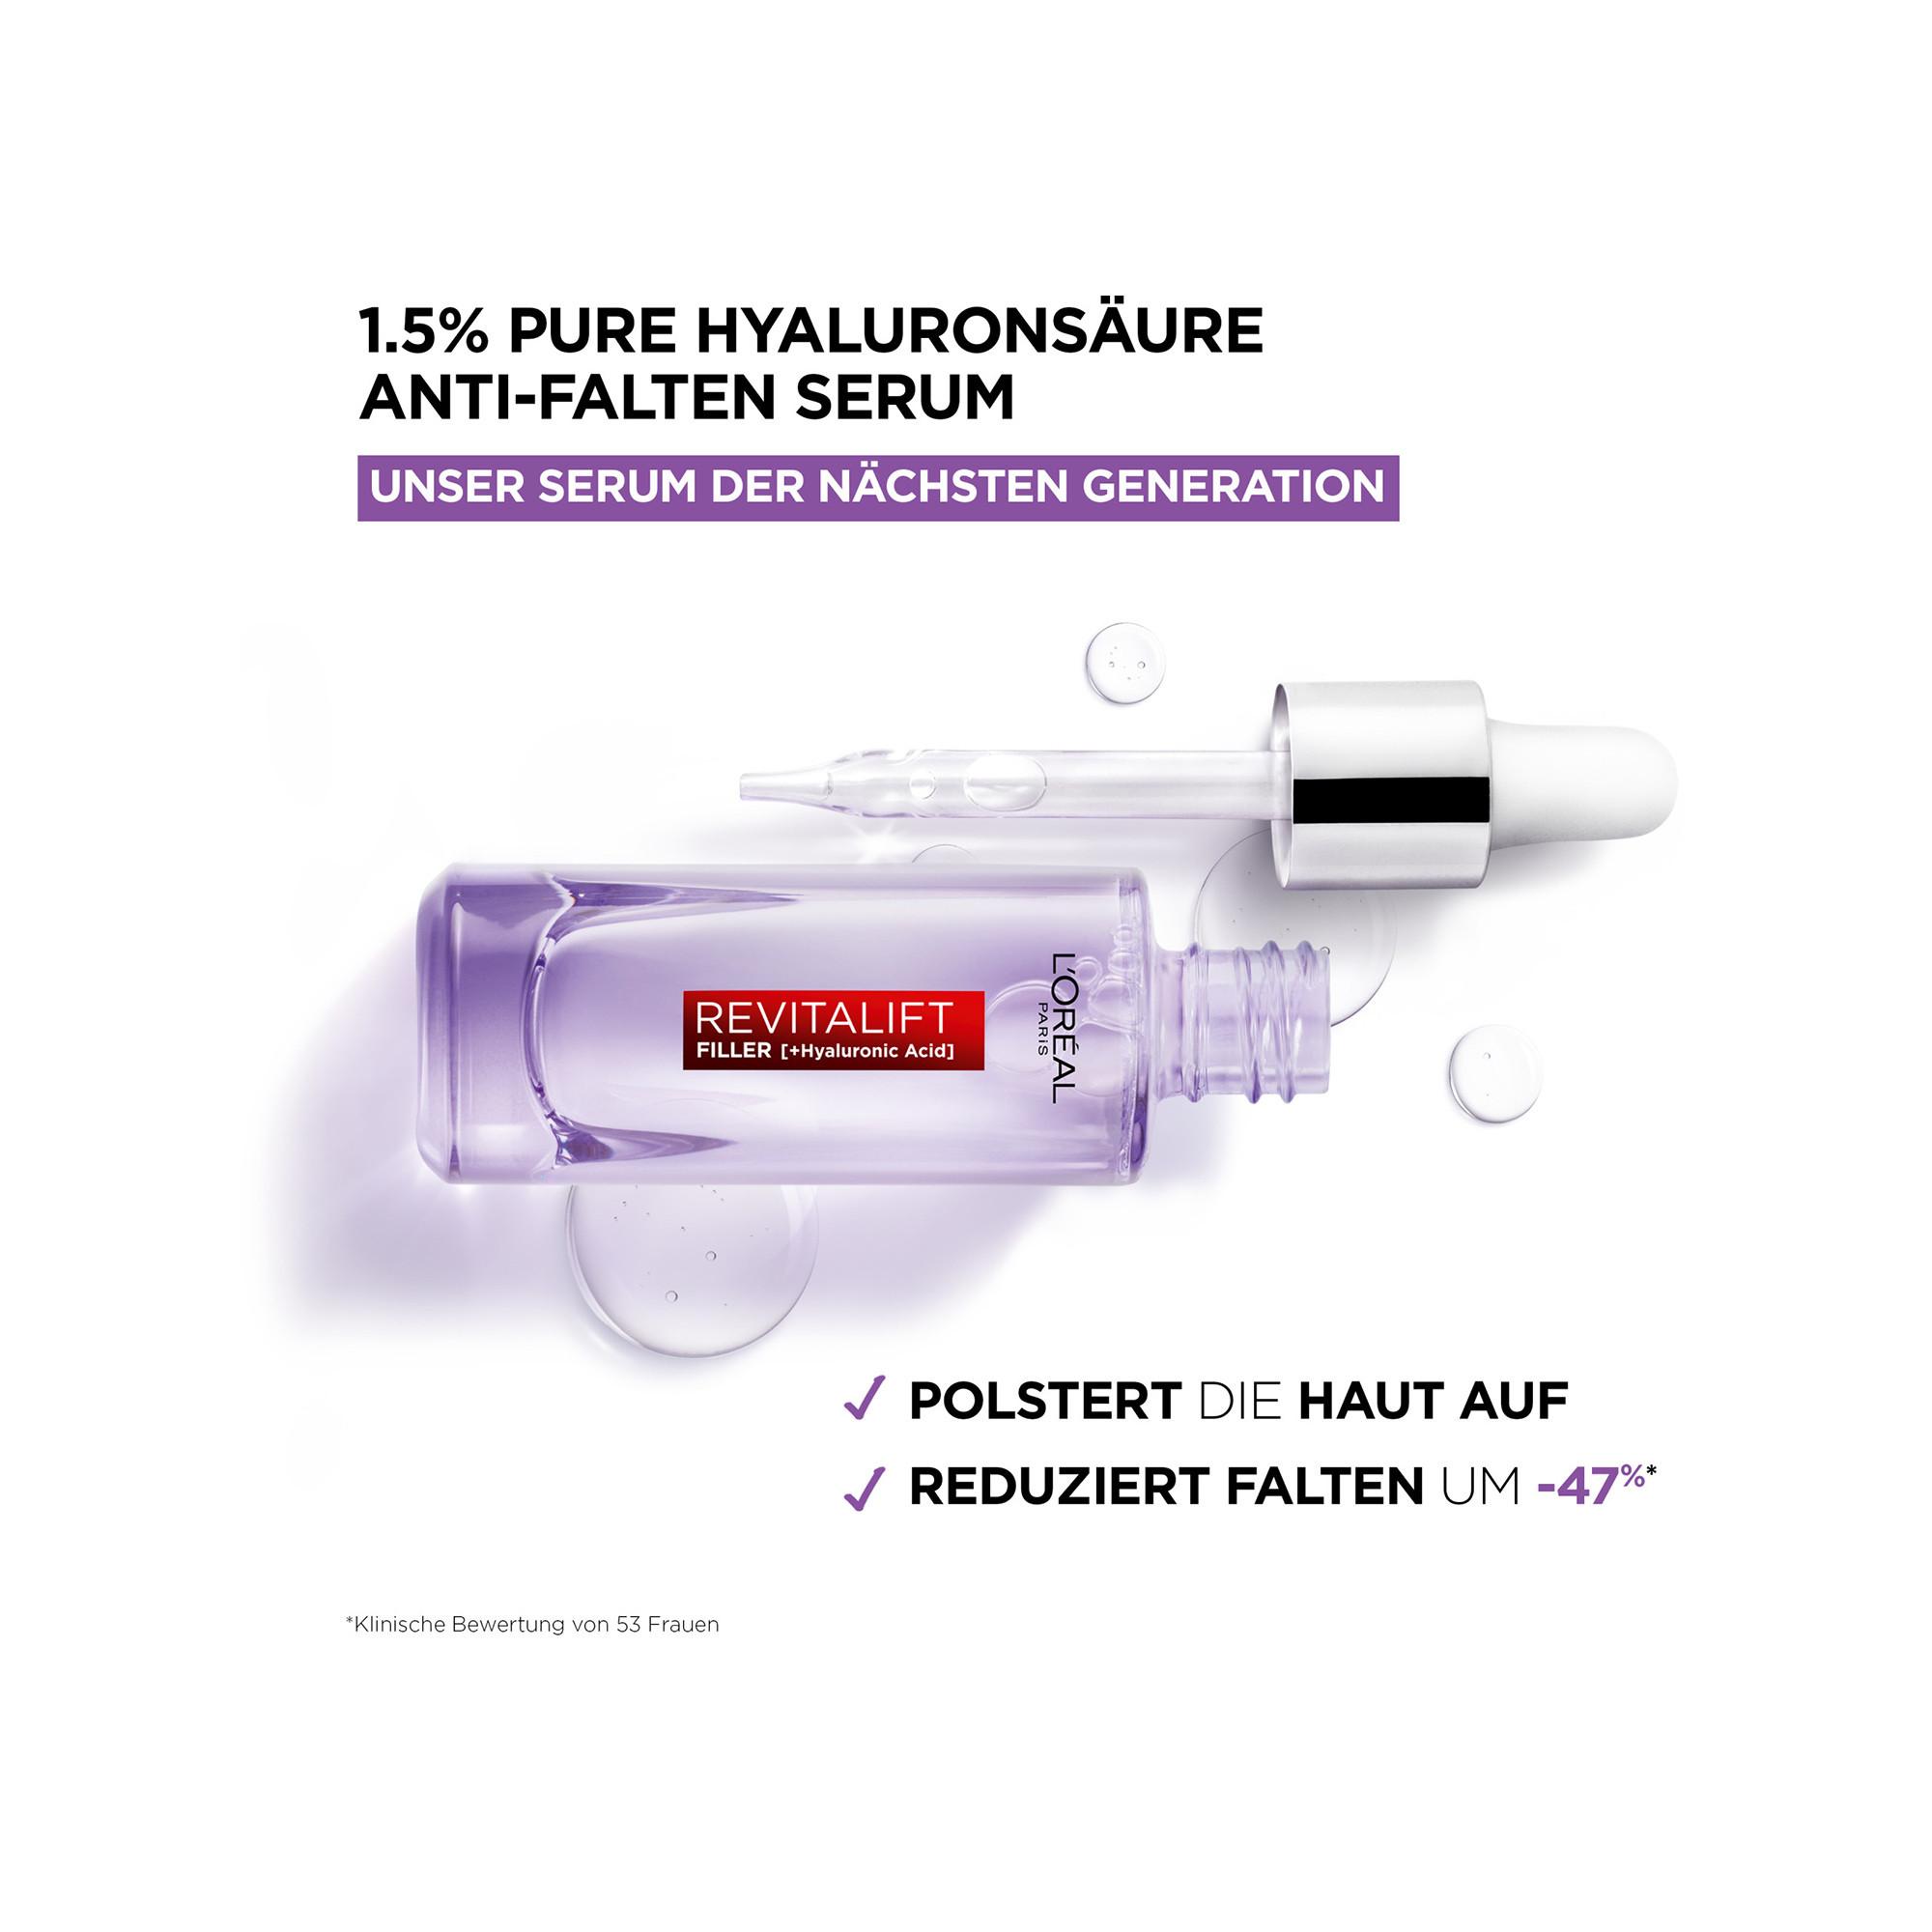 DERMO EXPERTISE - L'OREAL  Revitalift Filler Anti-Falten Serum 